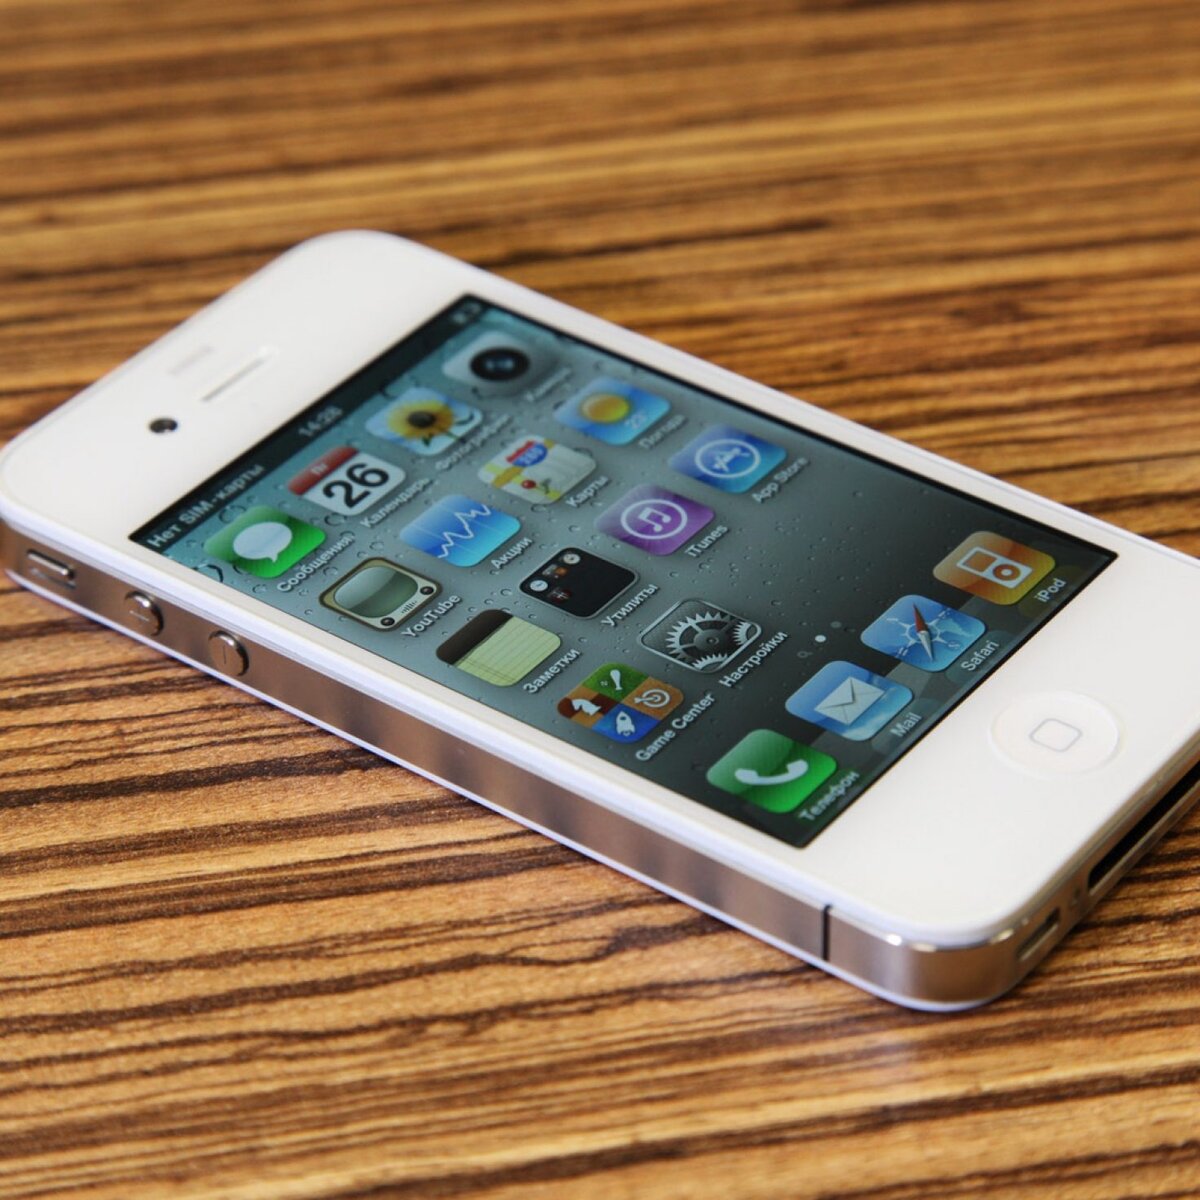 Картинки айфона 4. Айфон 4s. Iphone 4s (2011). Iphone 4. Apple iphone 4s.